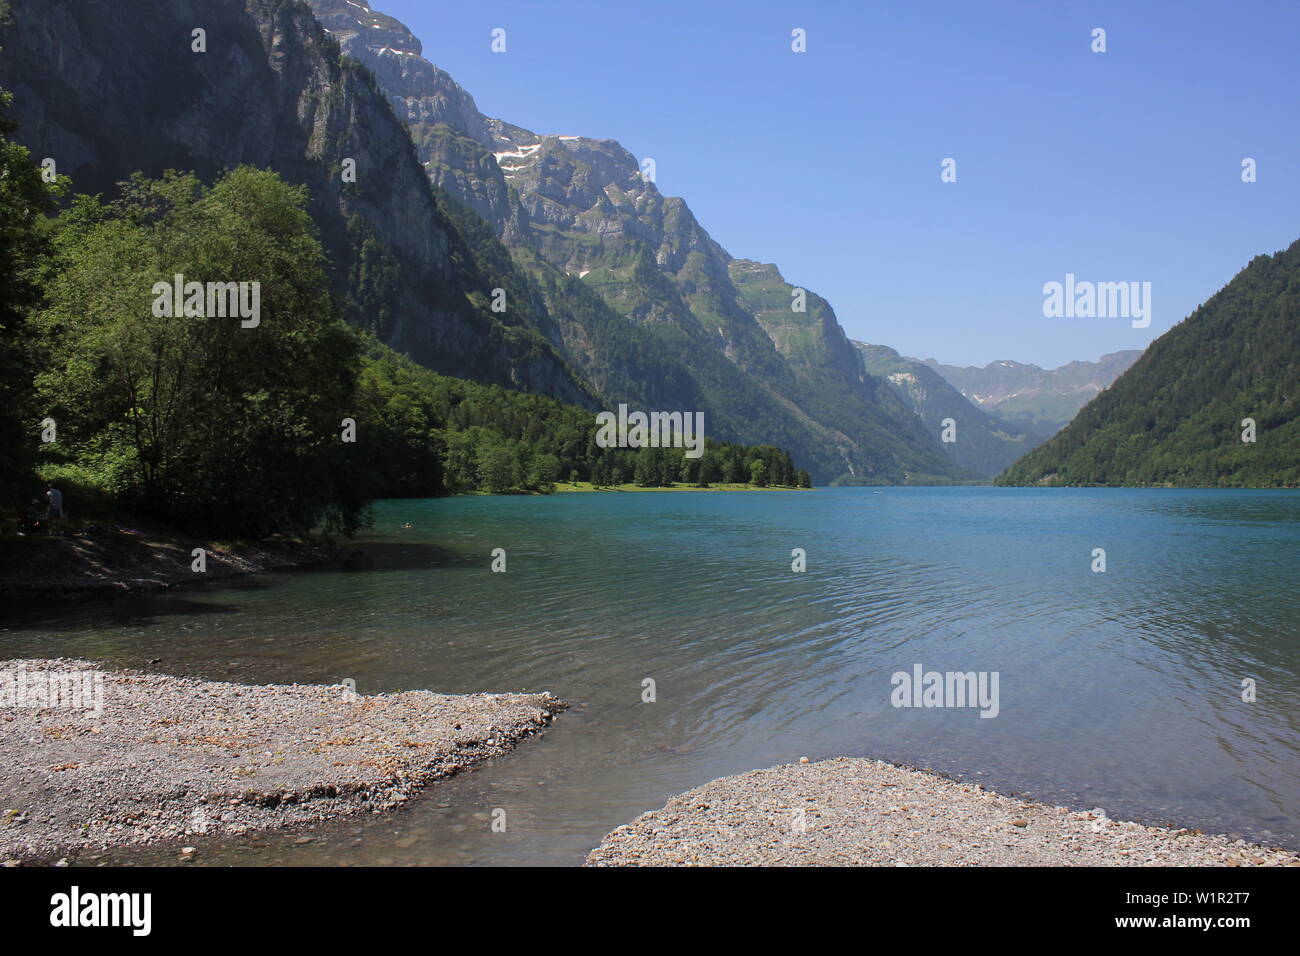 Clear turquoise water of Lake Kloental and surrounding mountains, Switzerland. Stock Photo